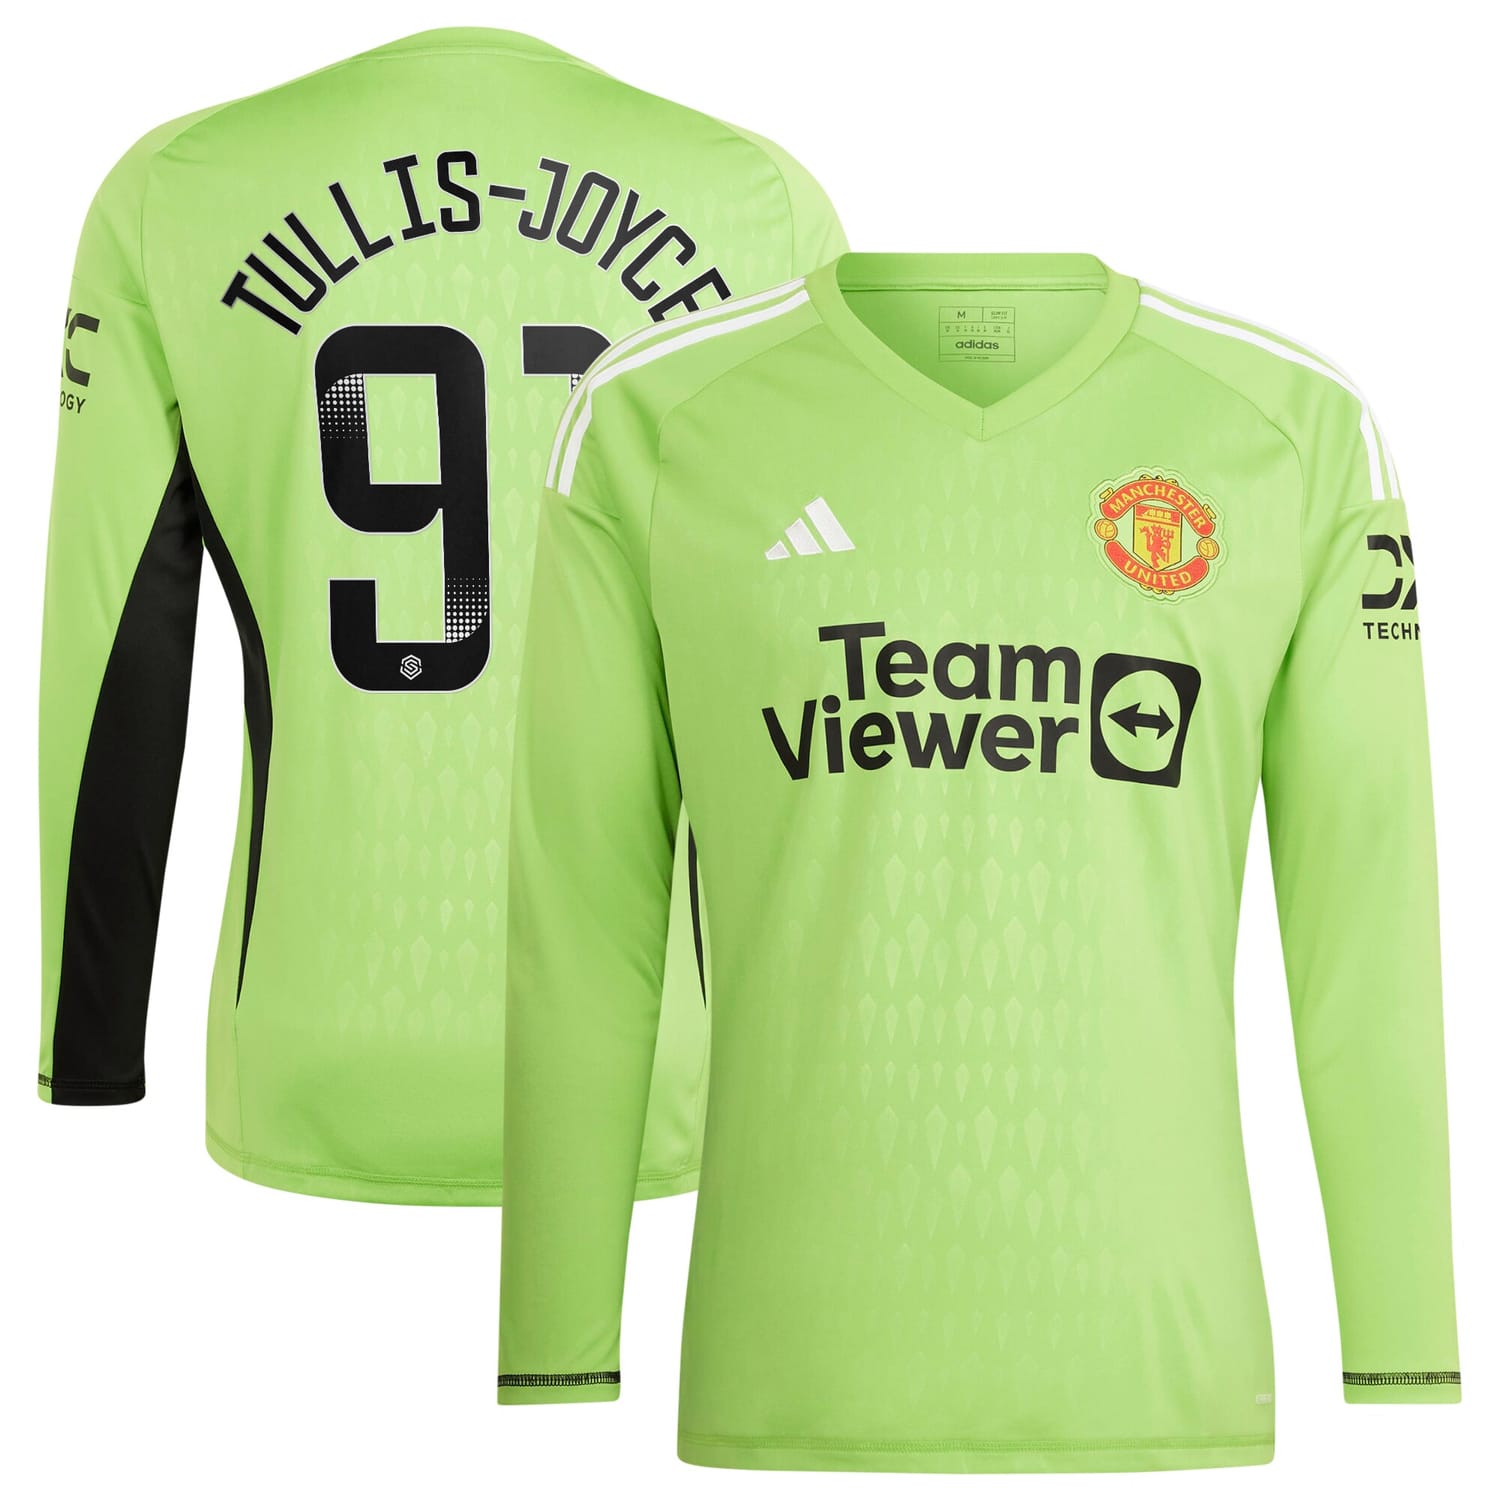 Premier League Manchester United Home Goalkeeper WSL Jersey Shirt 2023-24 player Phallon Tullis-Joyce 91 printing for Men